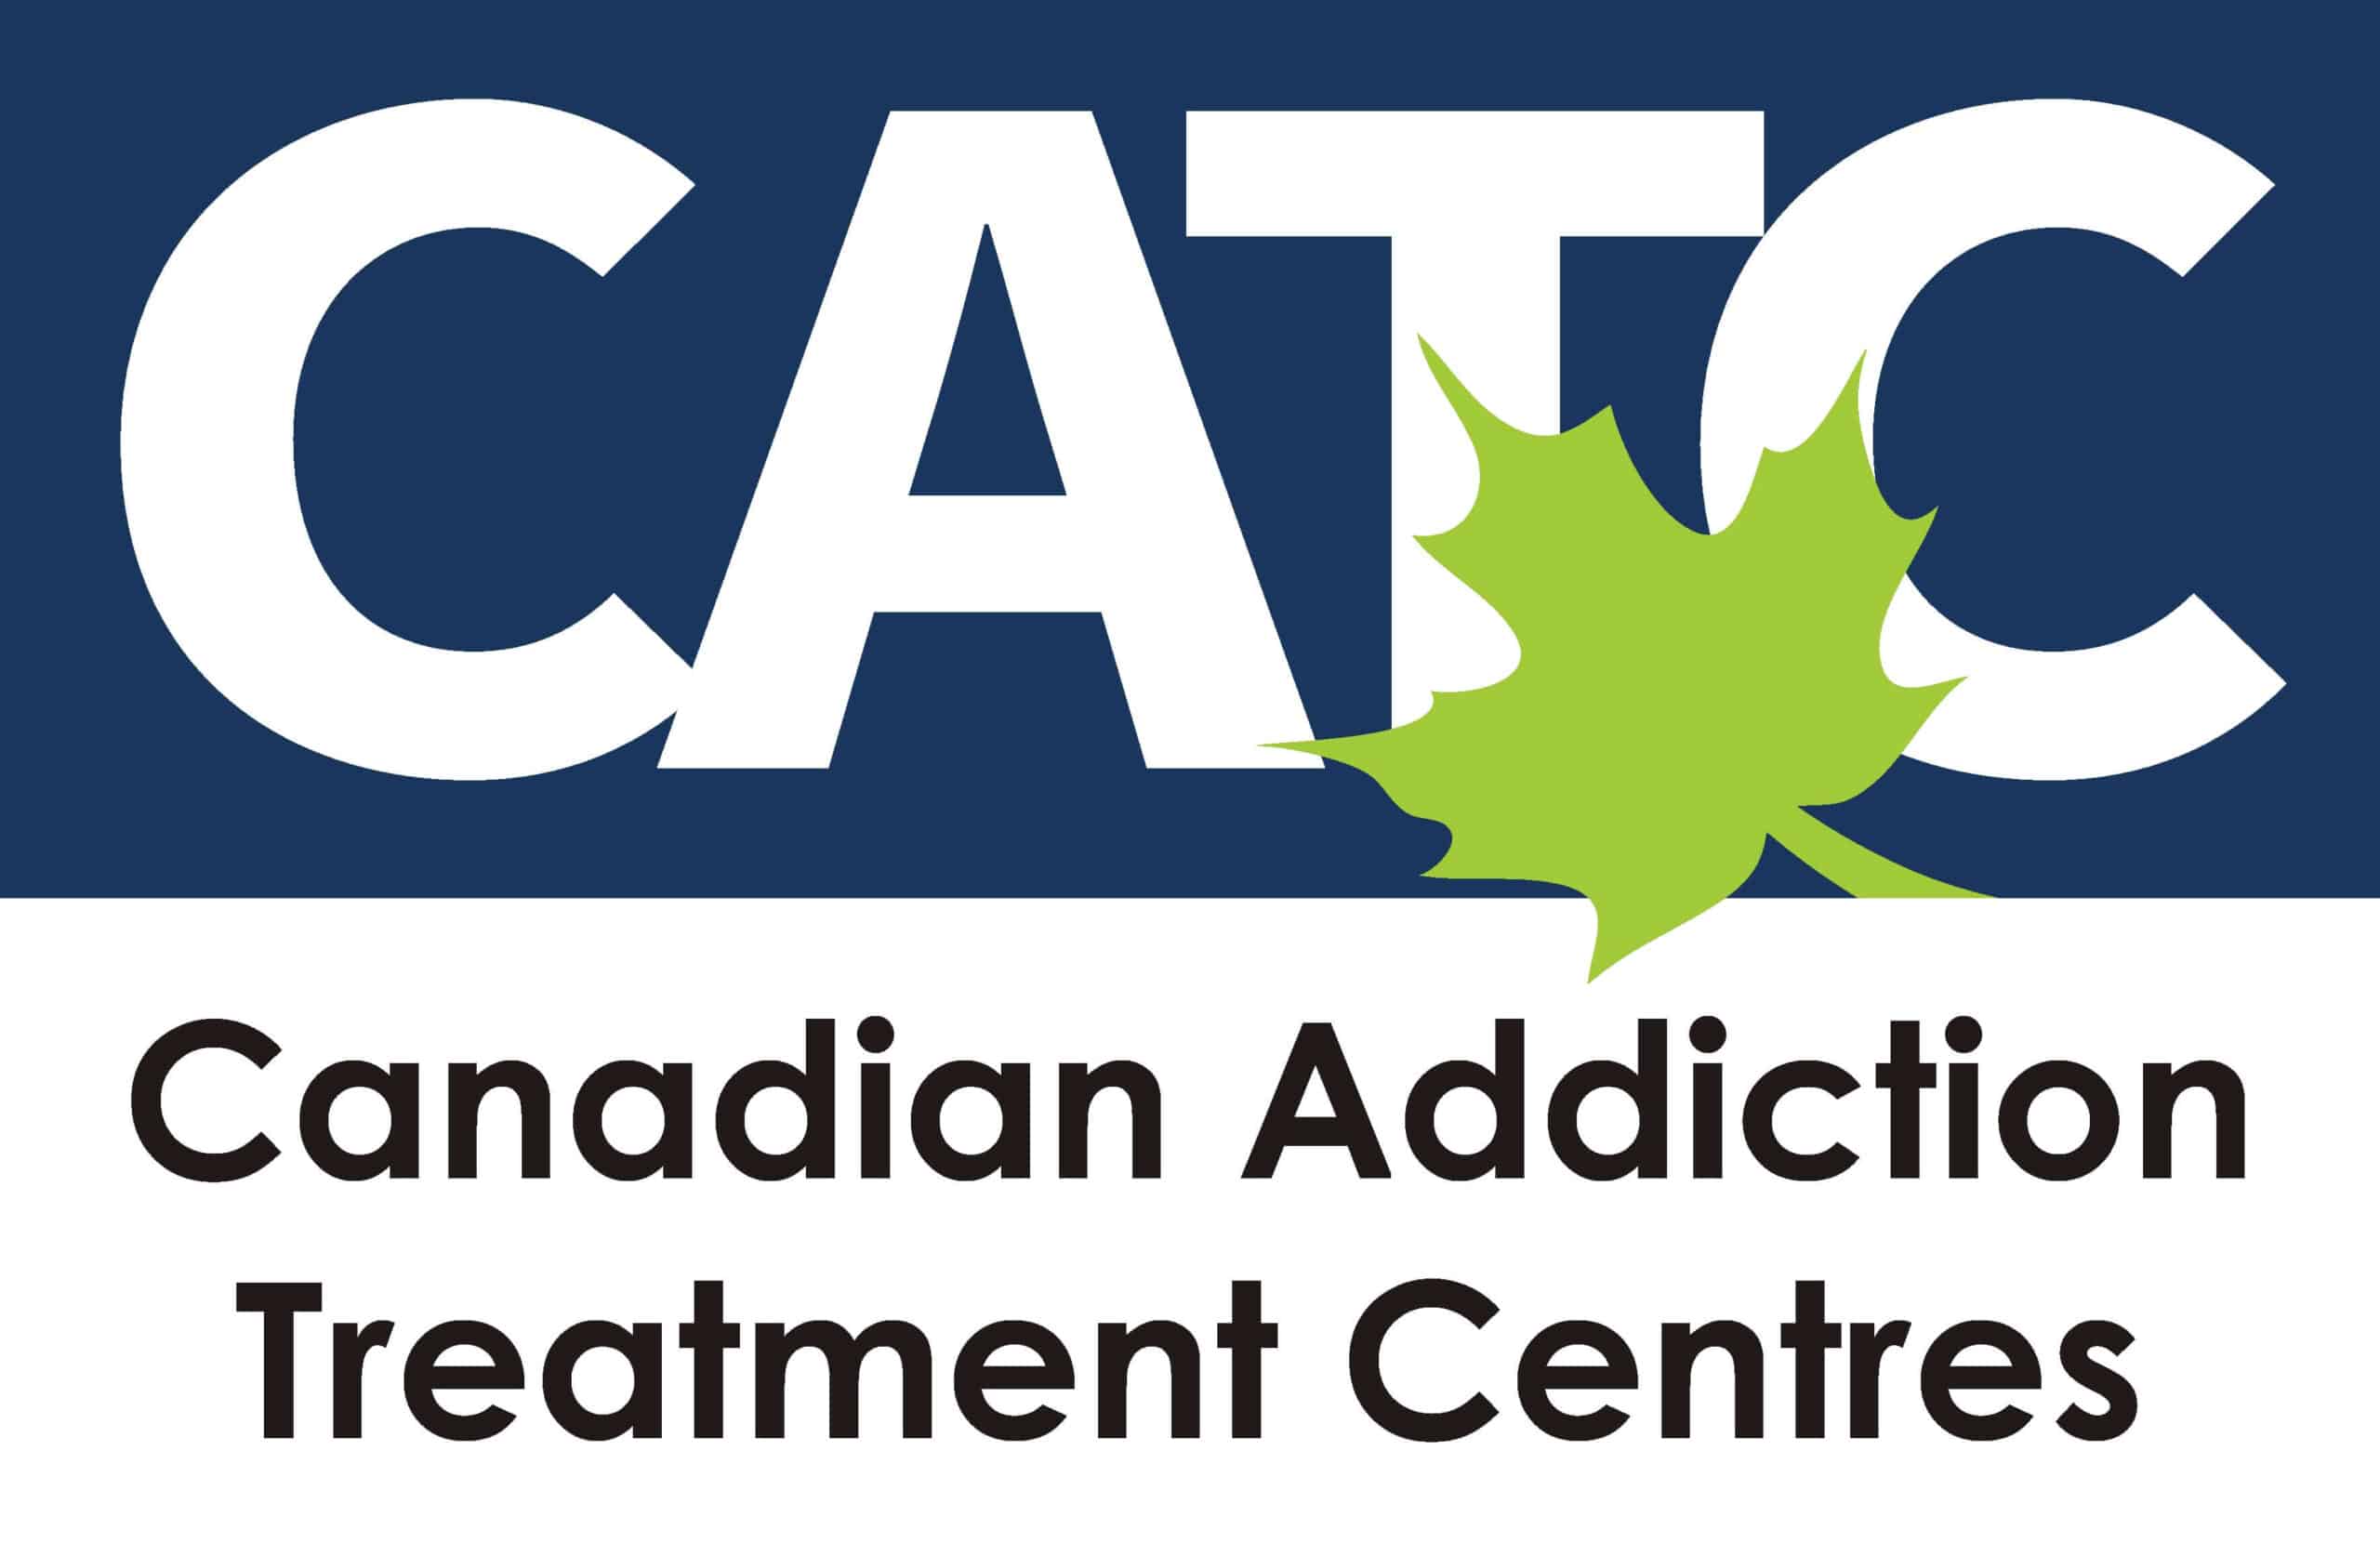 The CATC logo.